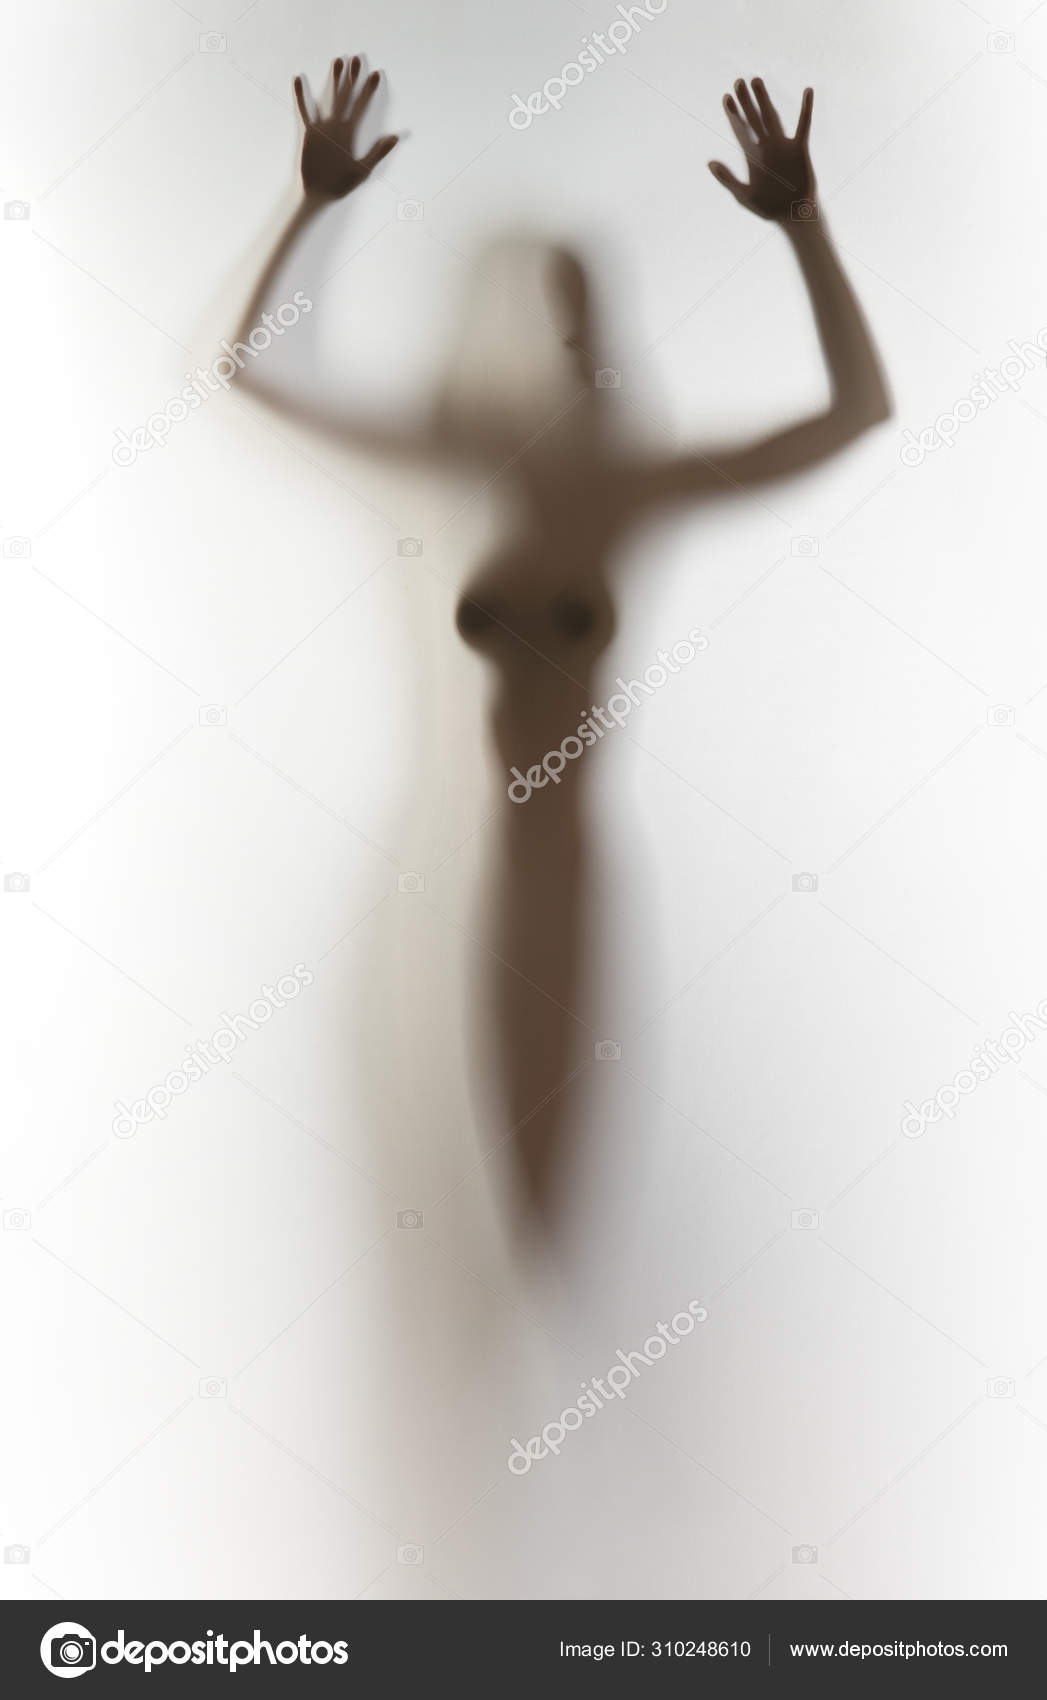 https://st4.depositphotos.com/1561500/31024/i/1600/depositphotos_310248610-stock-photo-female-body-silhouette-big-boobs.jpg